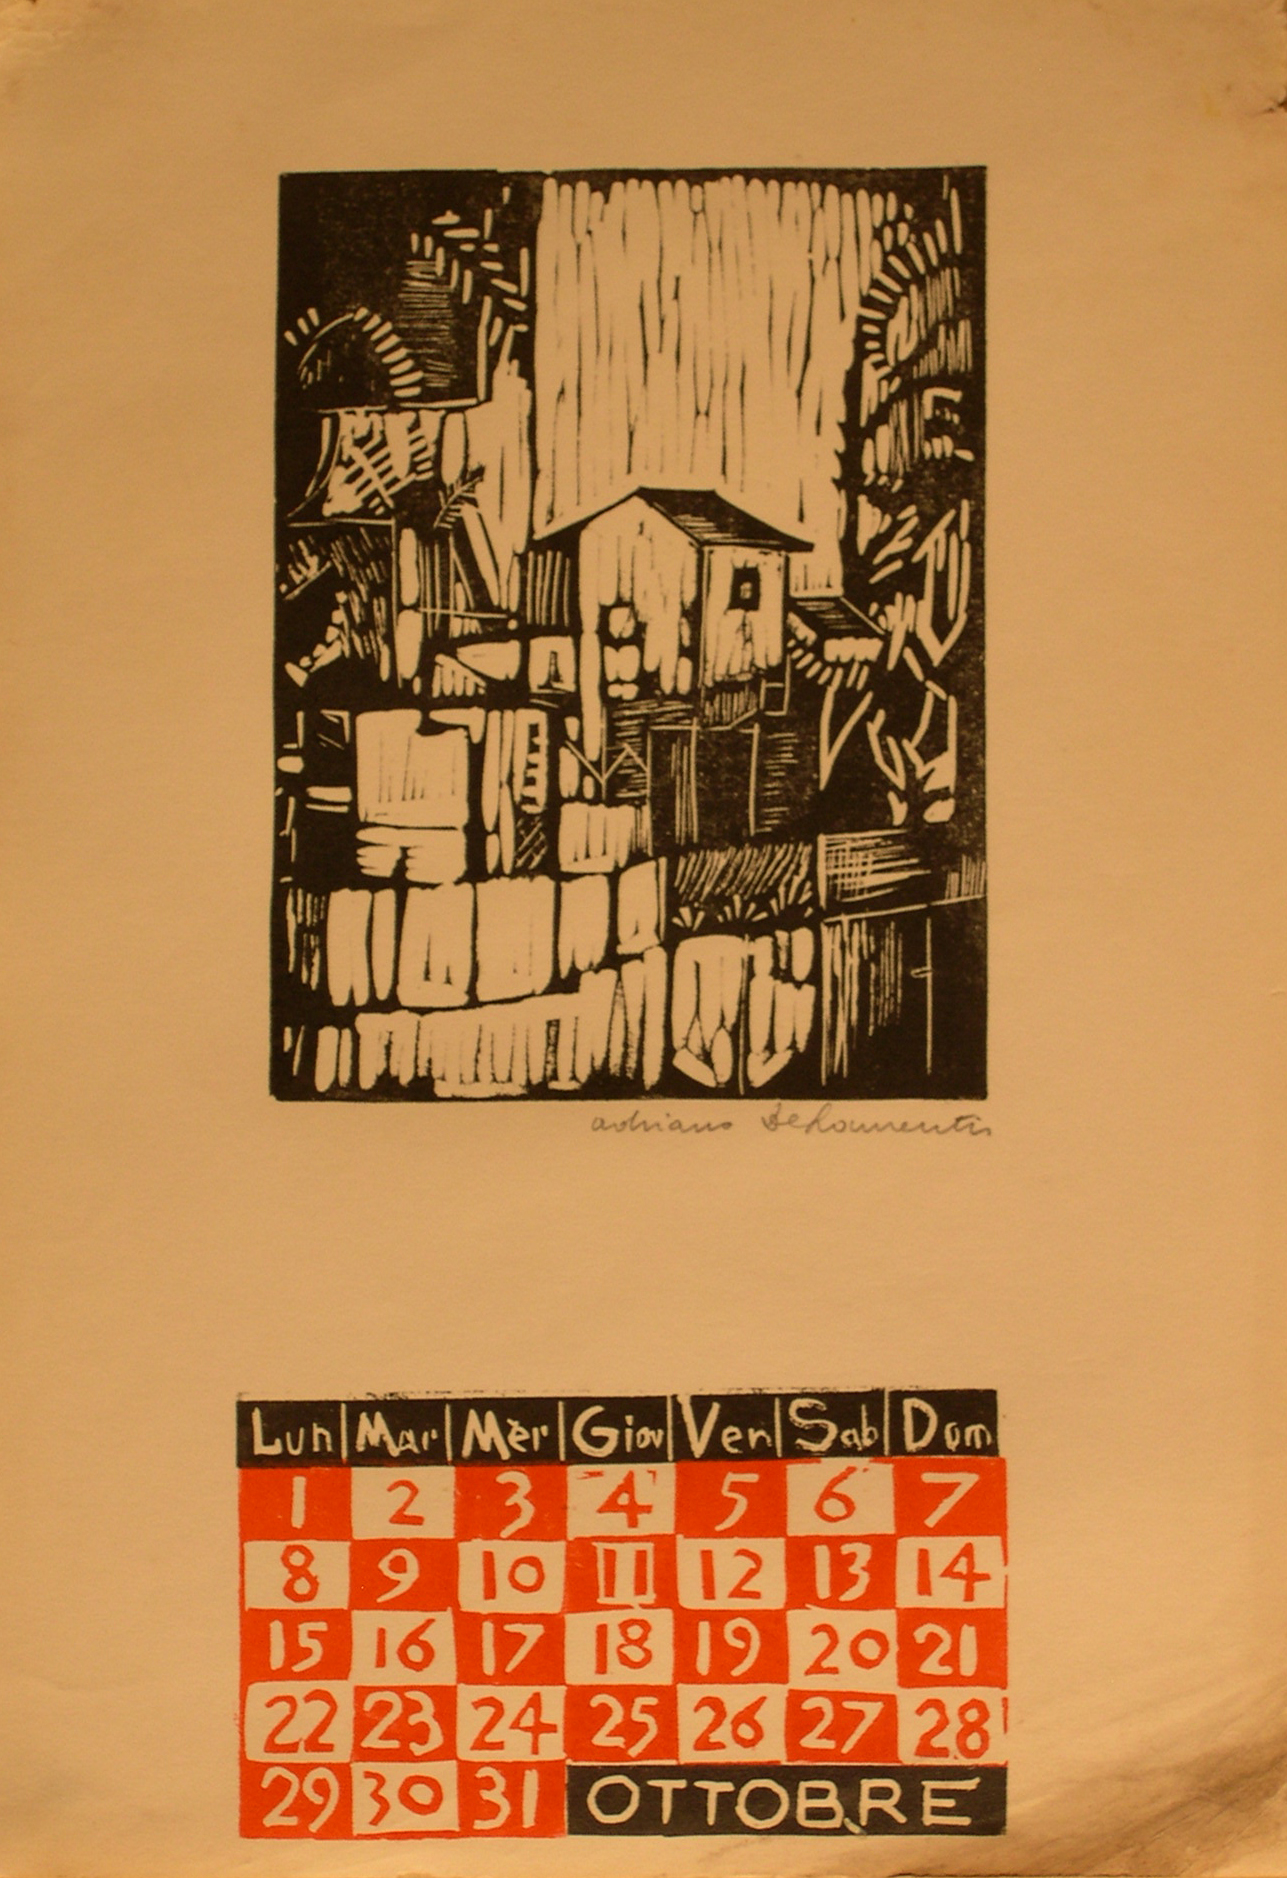 Calendario 1962 ottobre - Xilografia su Carta - 35x25 - 1962